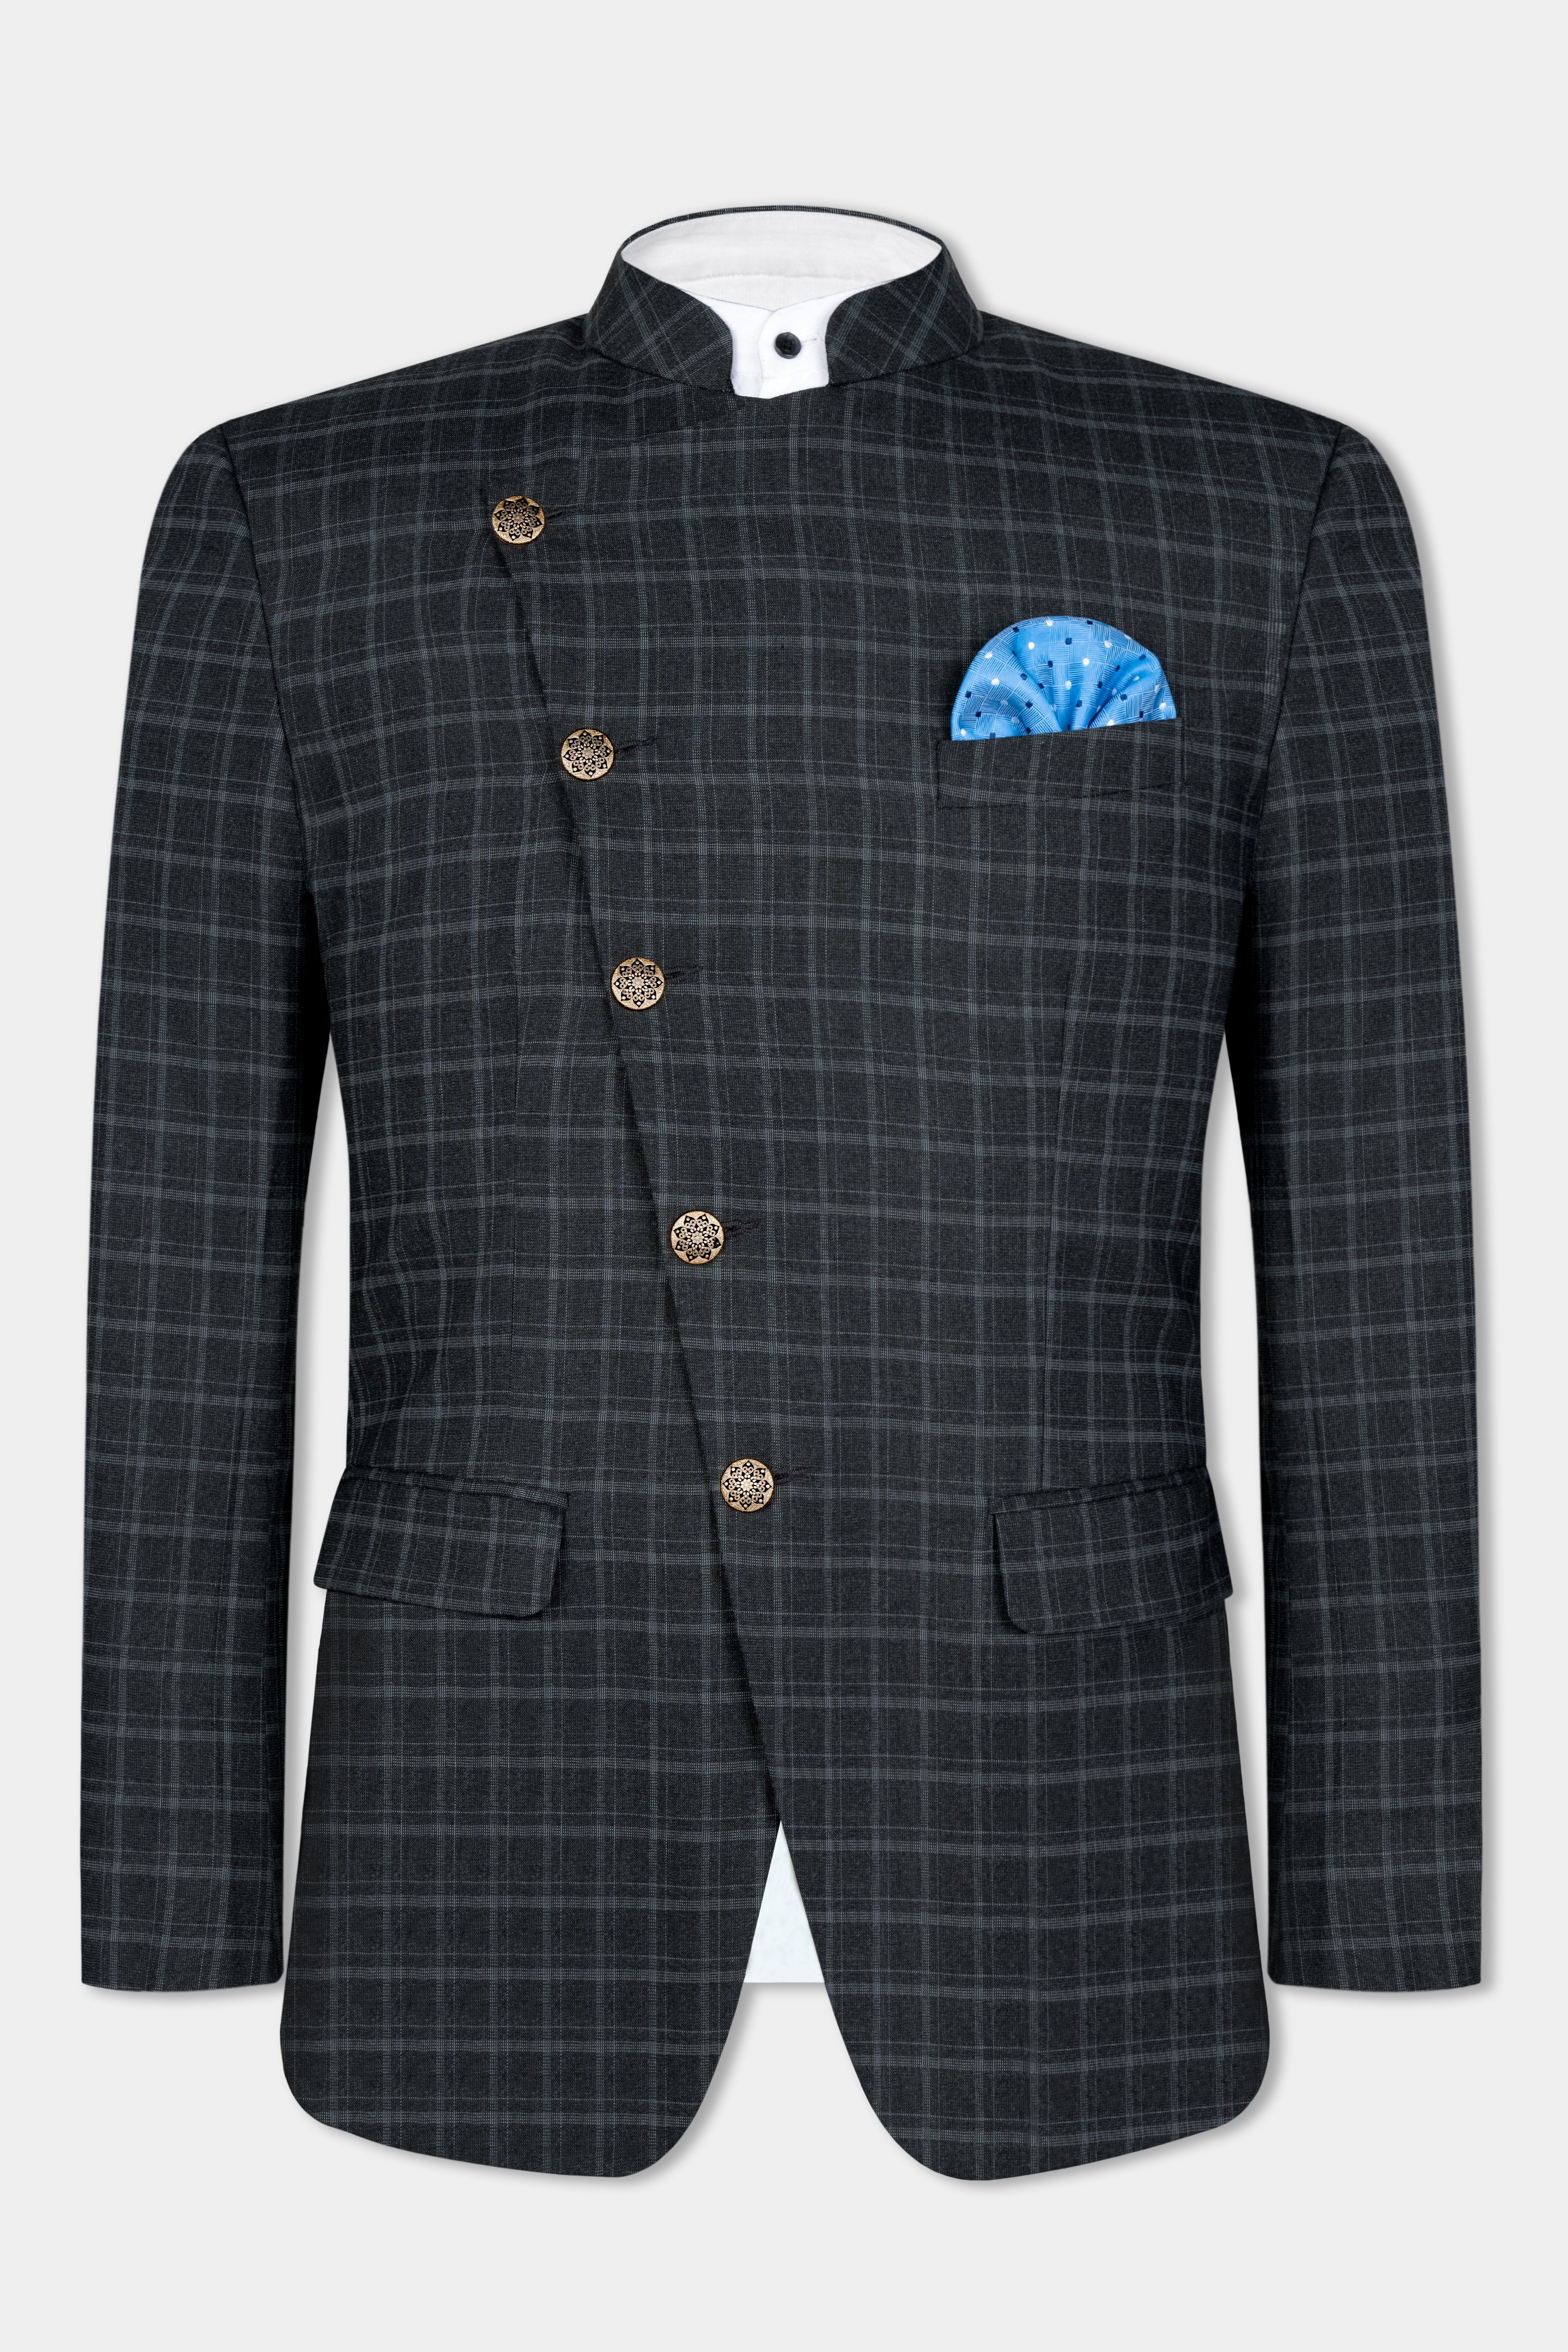 Cape God Gray windowpane Cross Bandhgala Suit